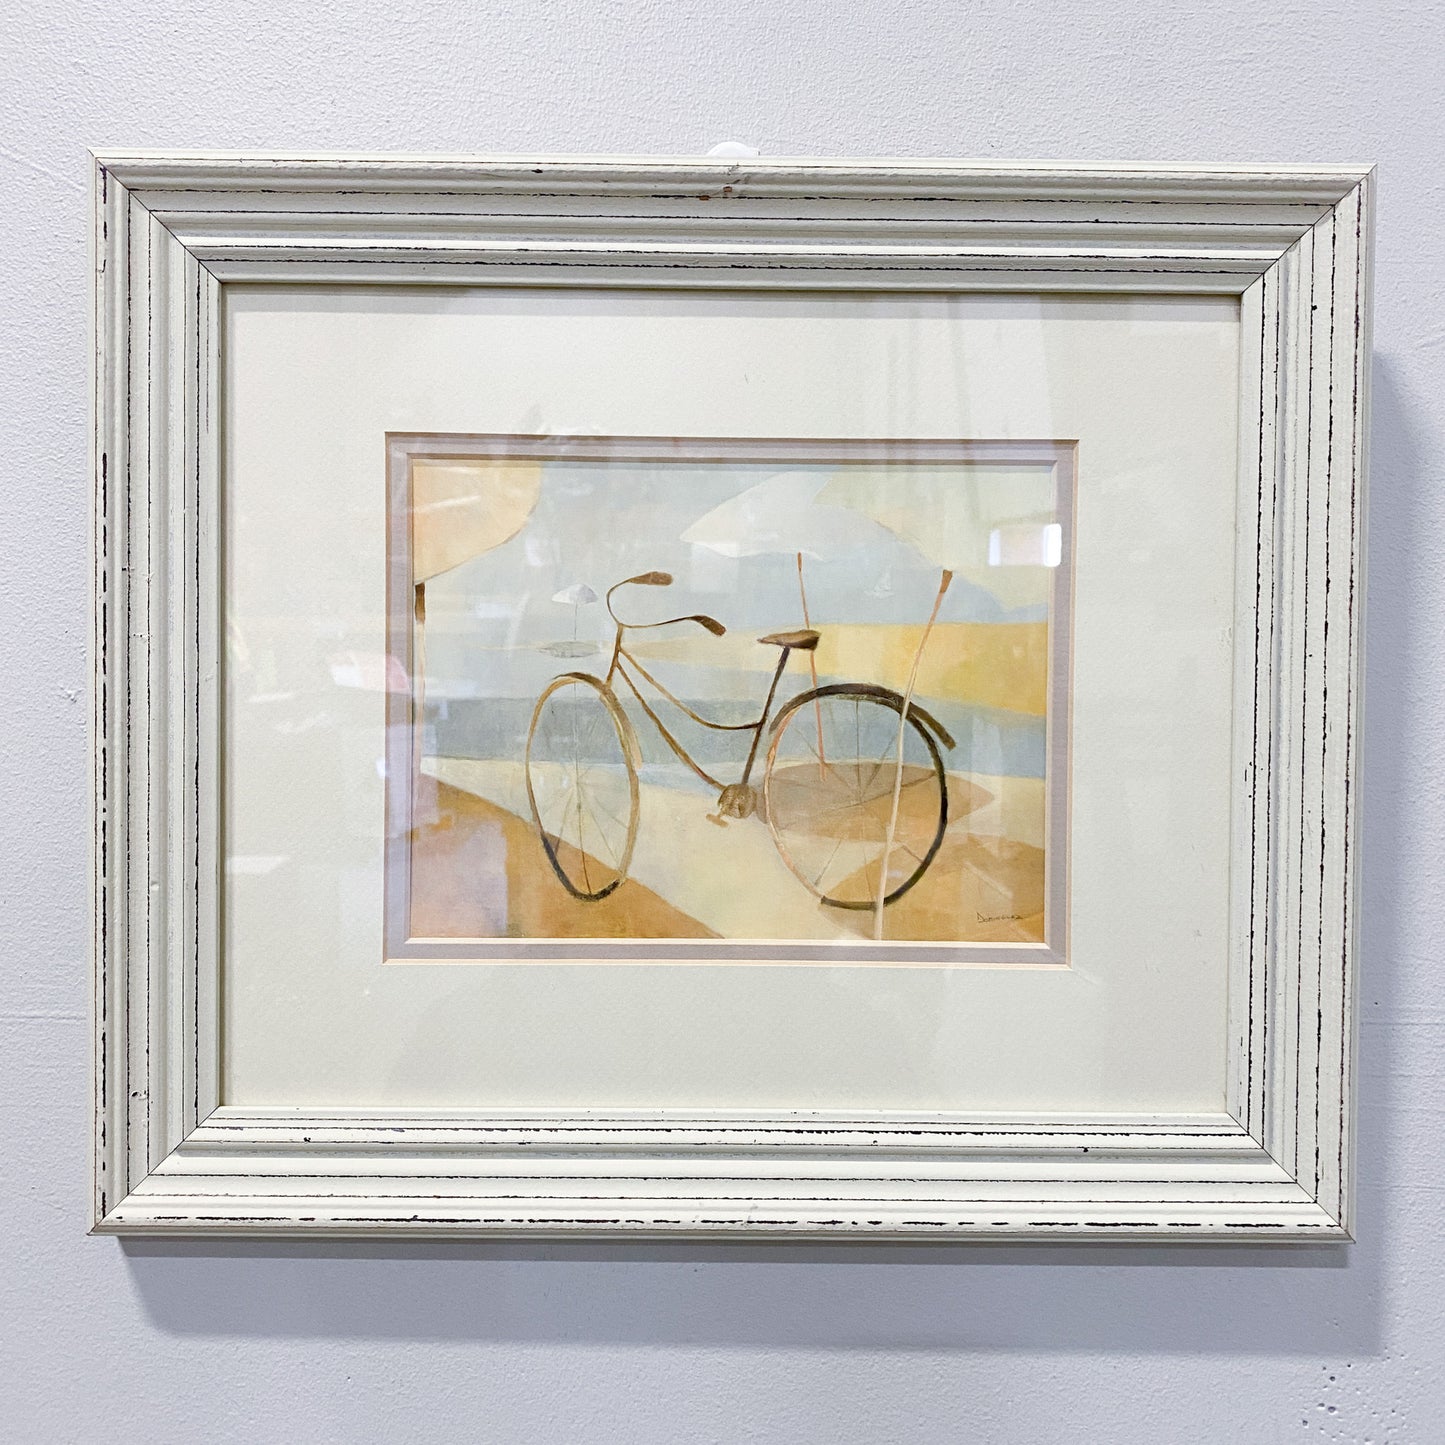 13" x 15.5" Framed Bicycle Artwork